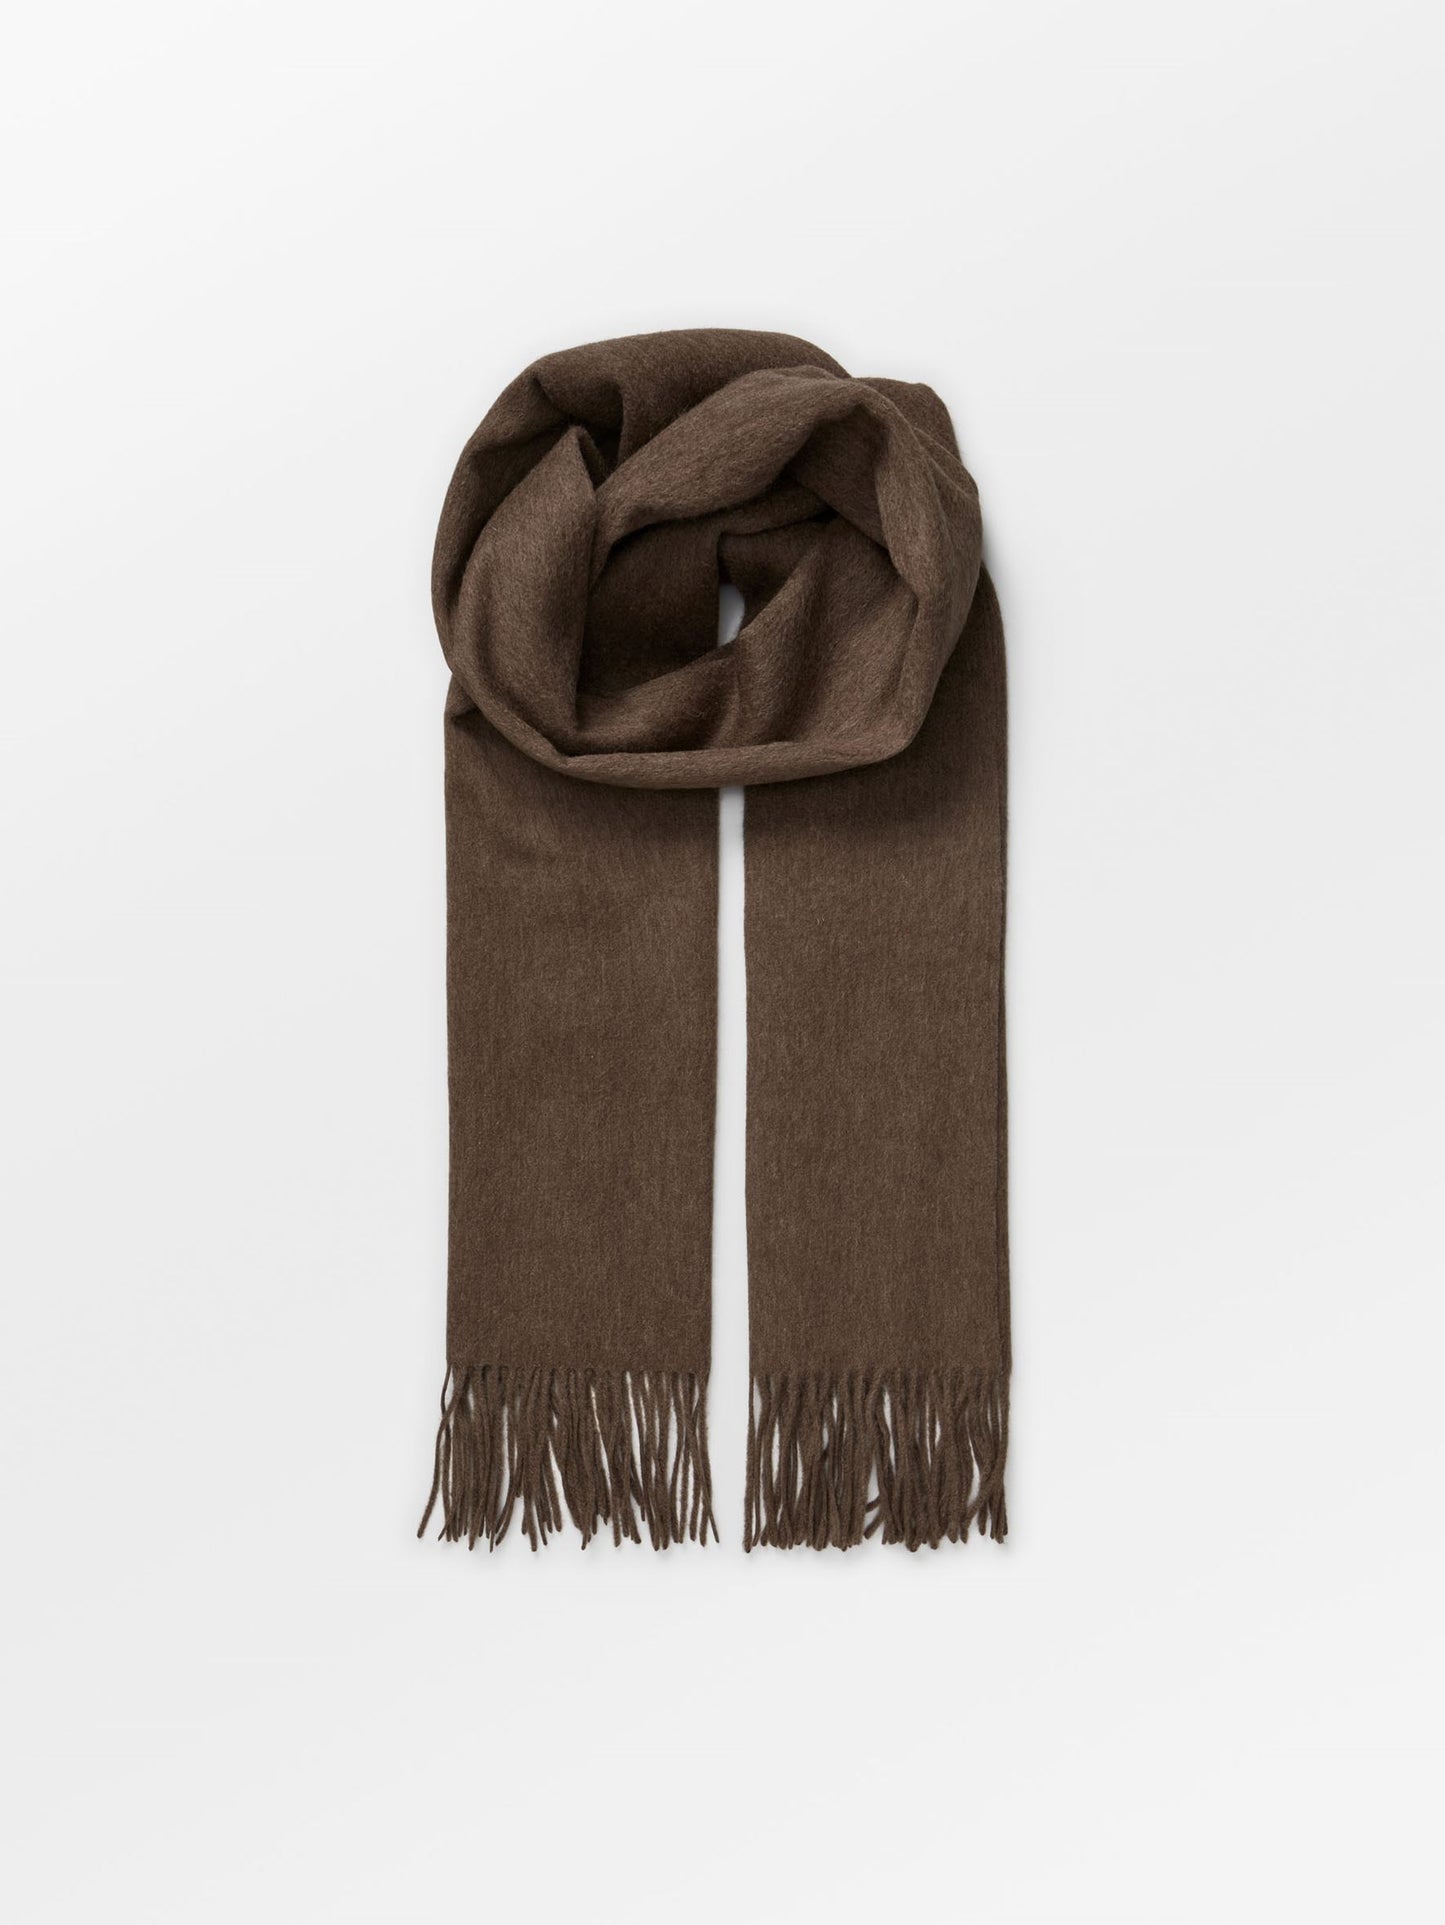 Becksöndergaard, Crystal Edition Scarf - Dark Brown, scarves, scarves, gifts